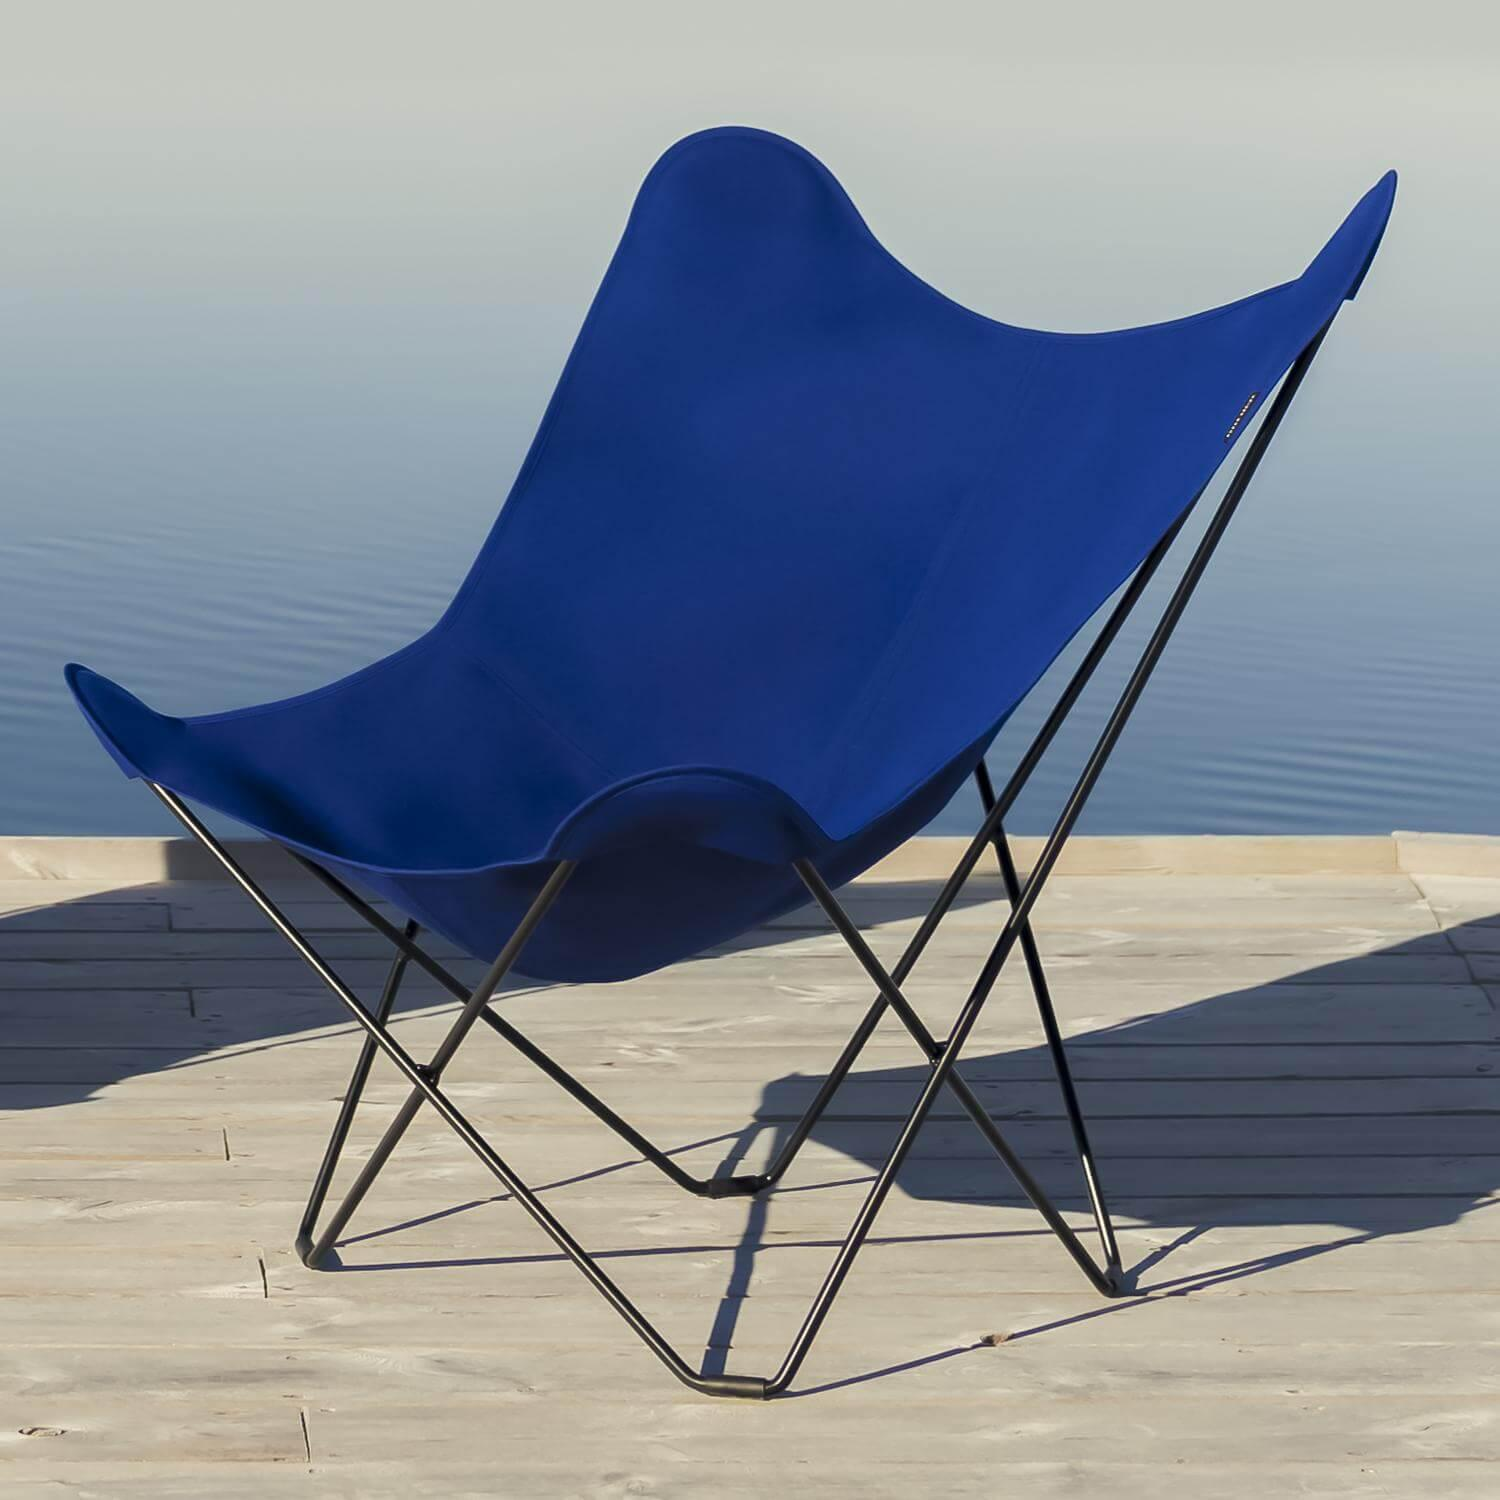 Outdoor Stuhl Sunshine Mariposa Sunbrella Stoff Atlantikblau Blau Gestell Stahl Schwarz